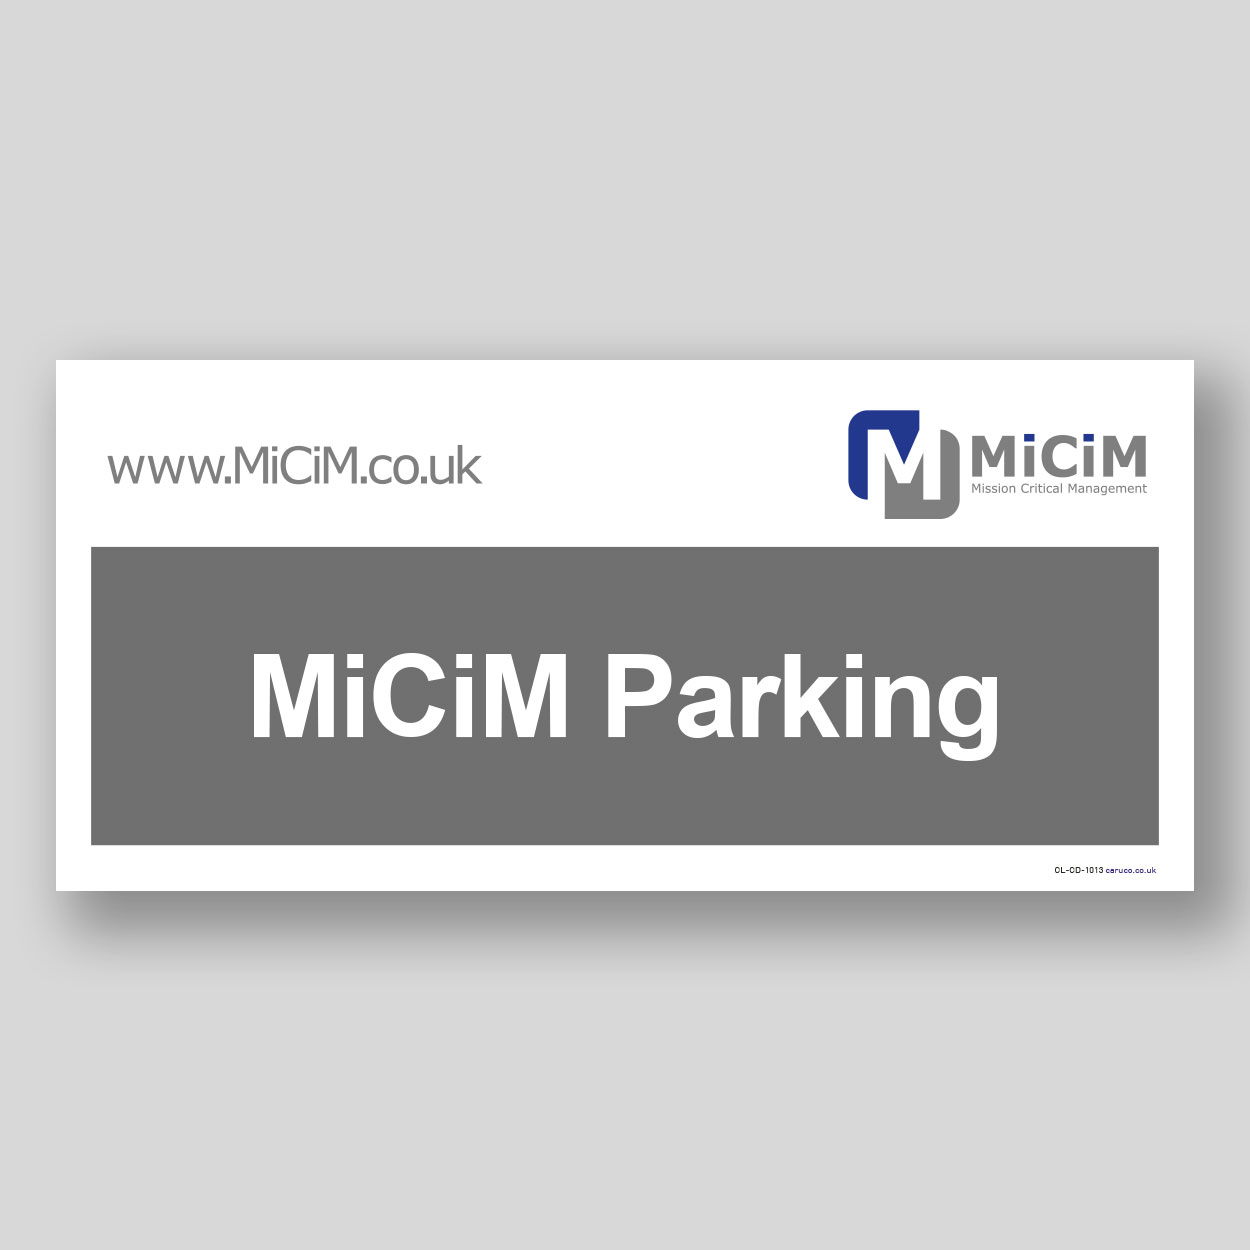 CL-CD-1013 MiCiM Parking